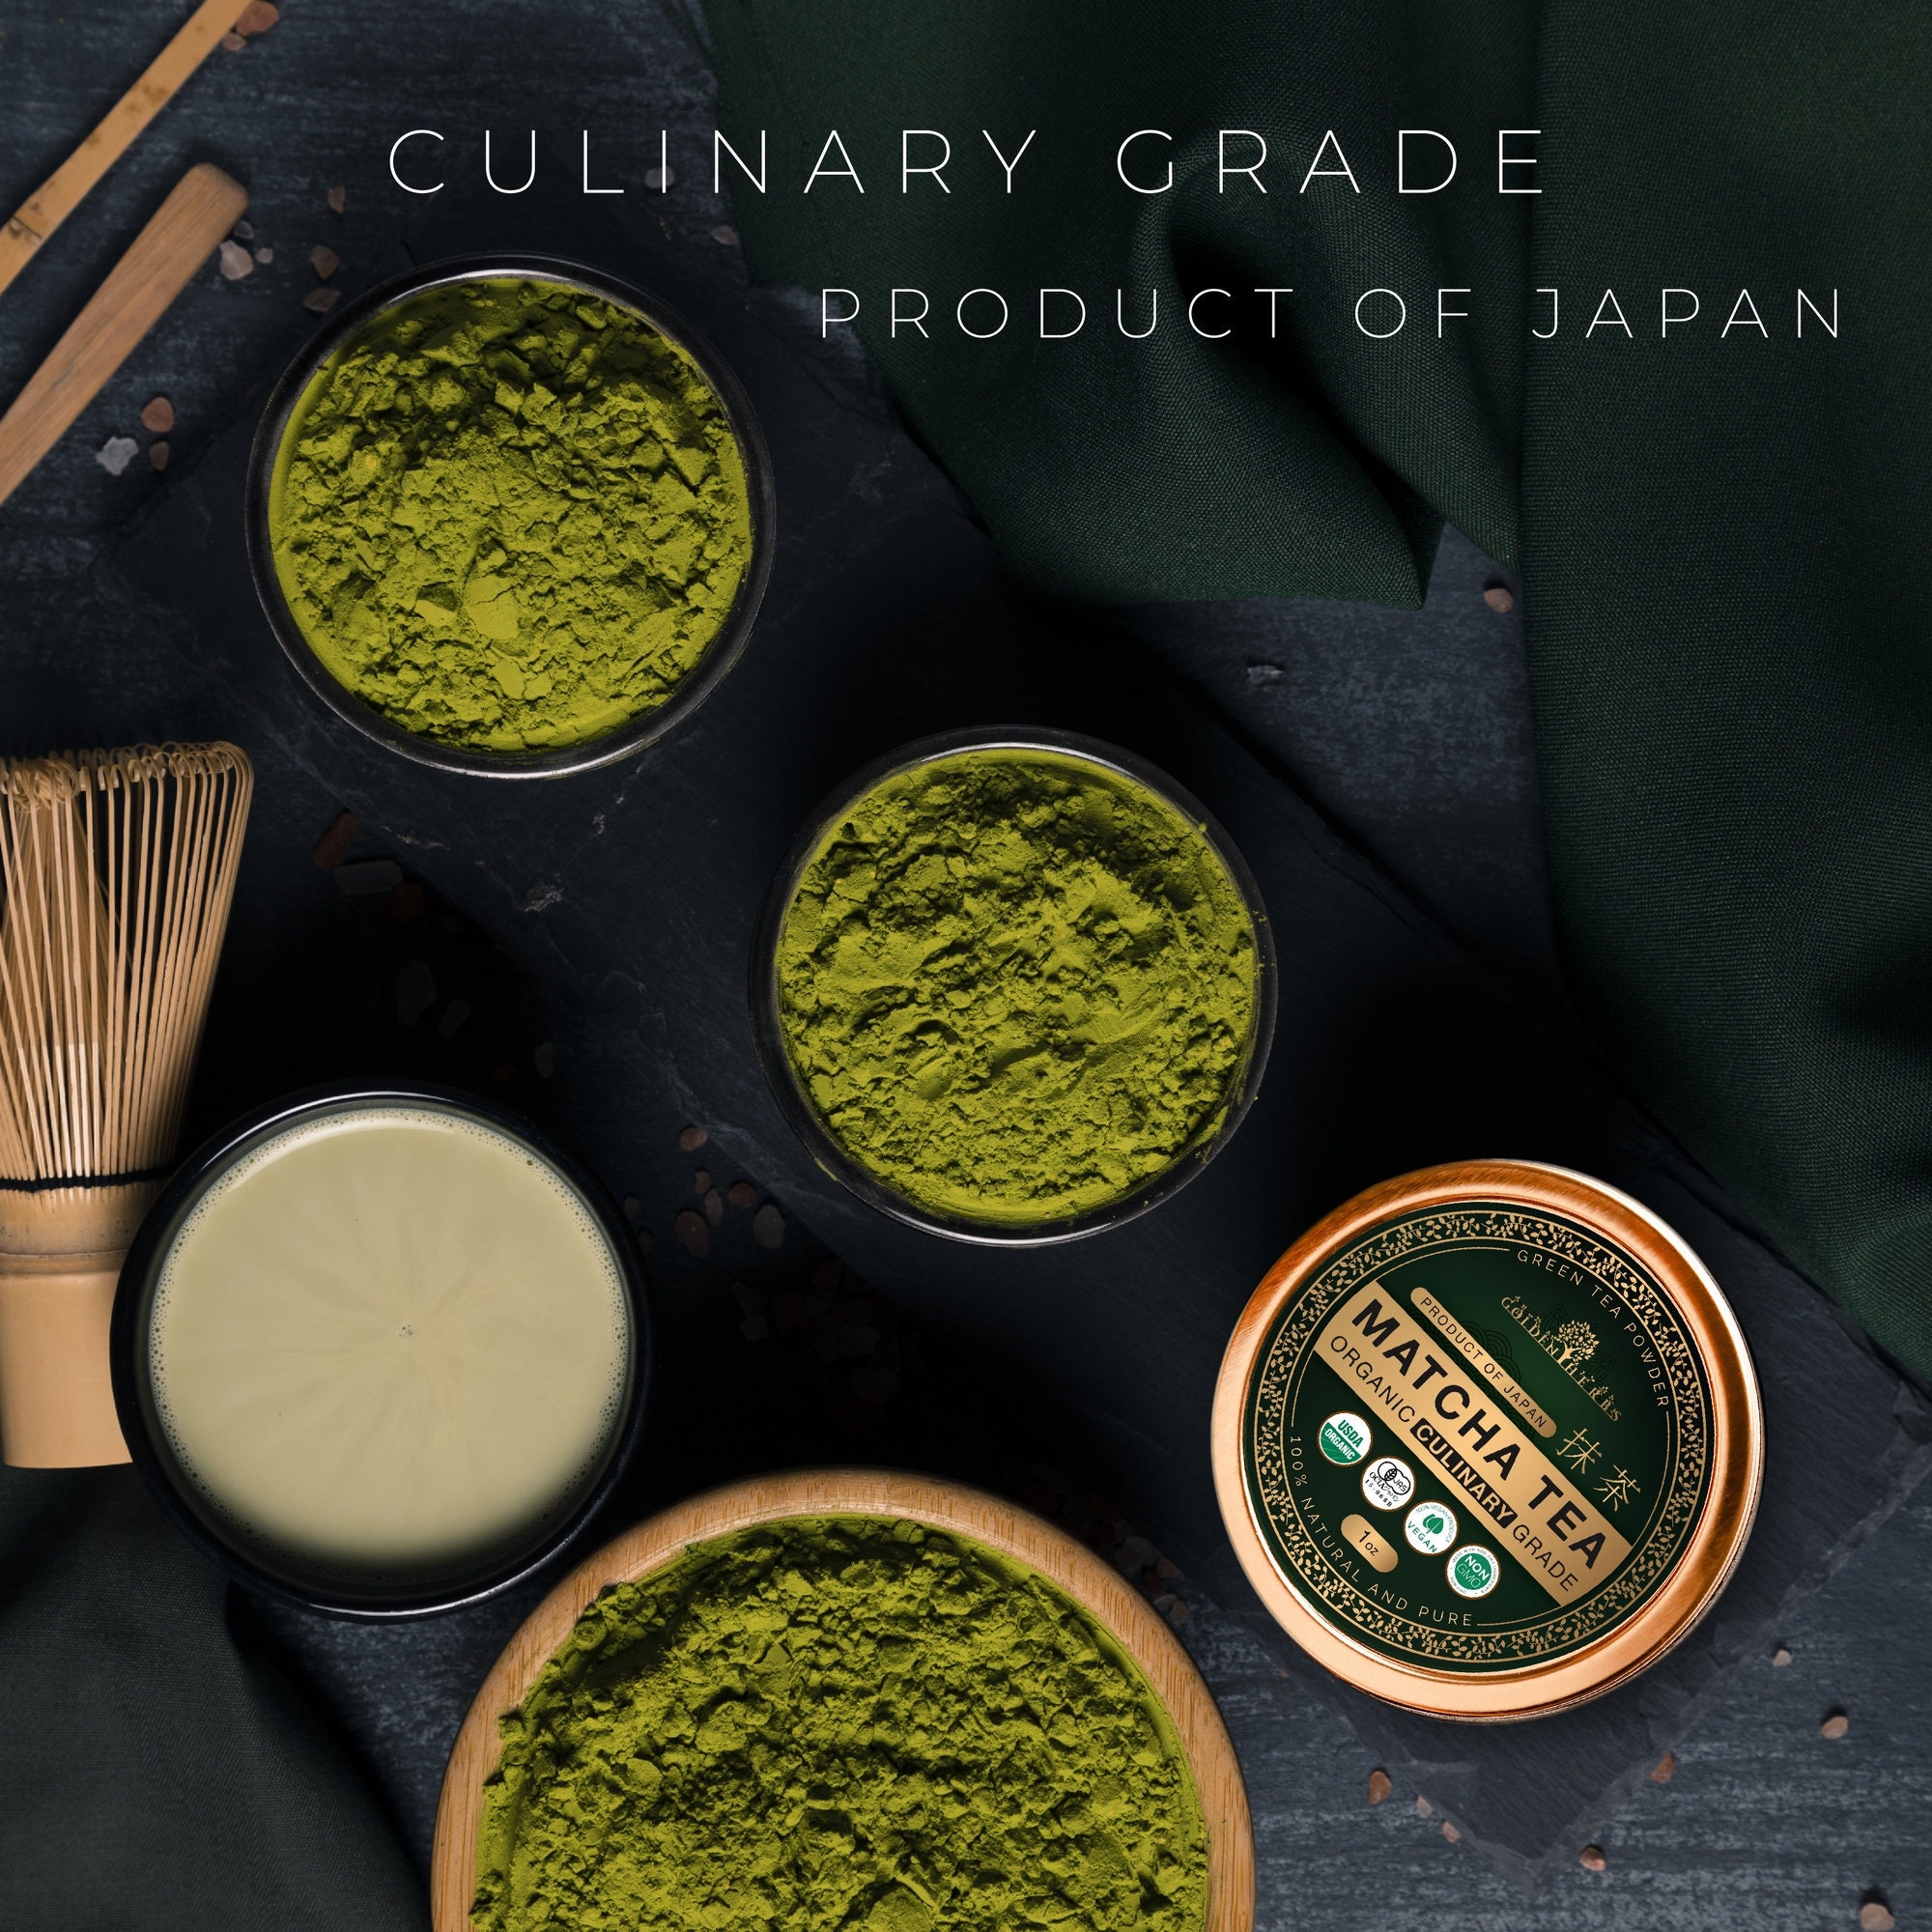  Golde Pure Matcha, Ceremonial Grade Matcha Green Tea Powder